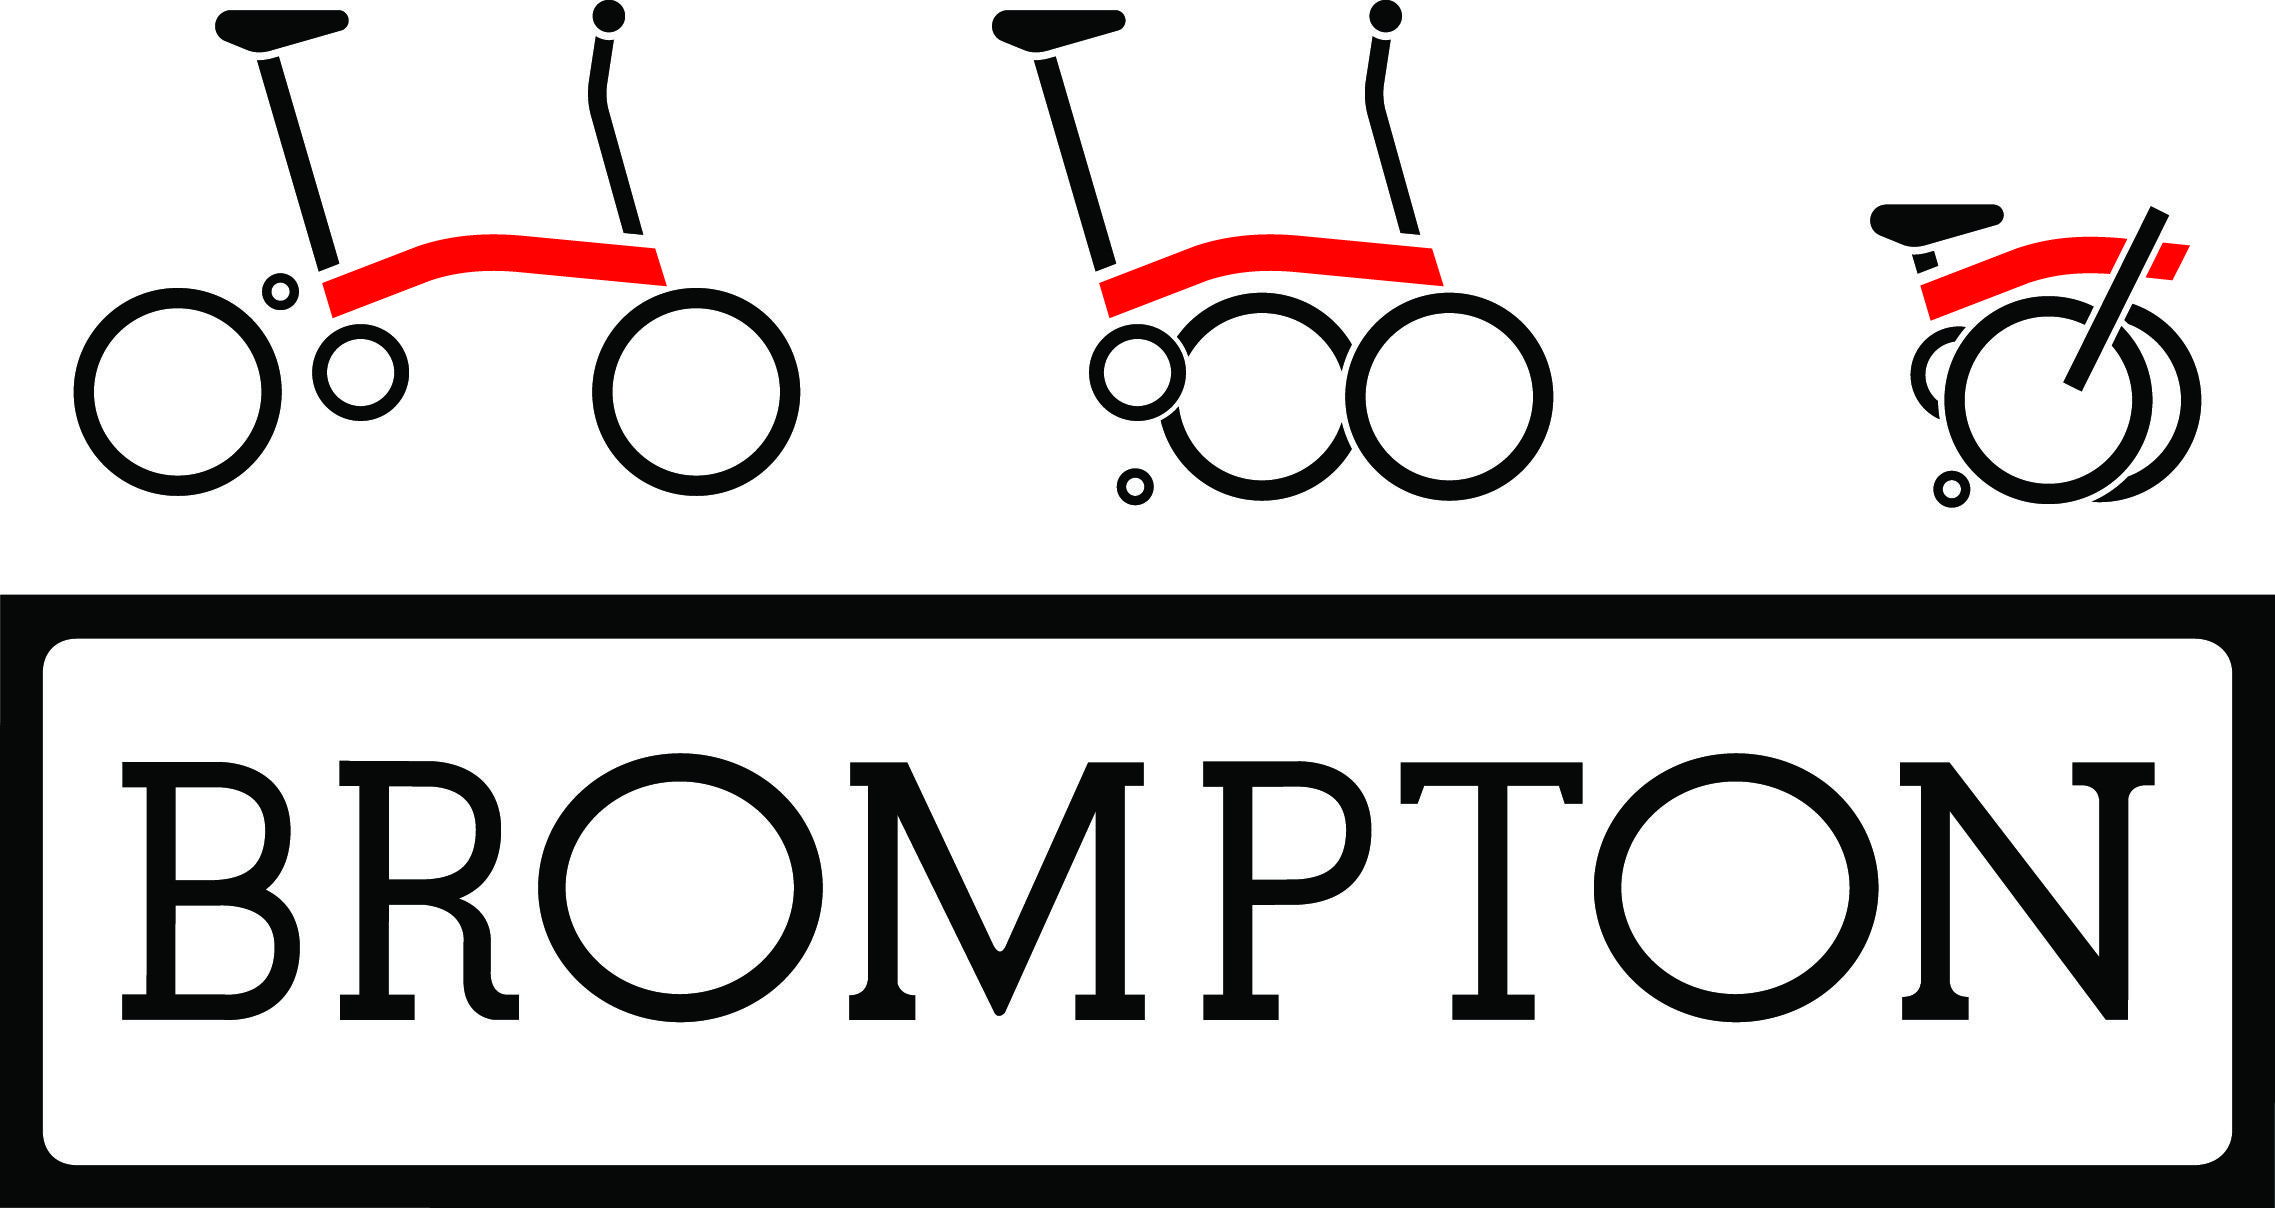 Brompton bicycles